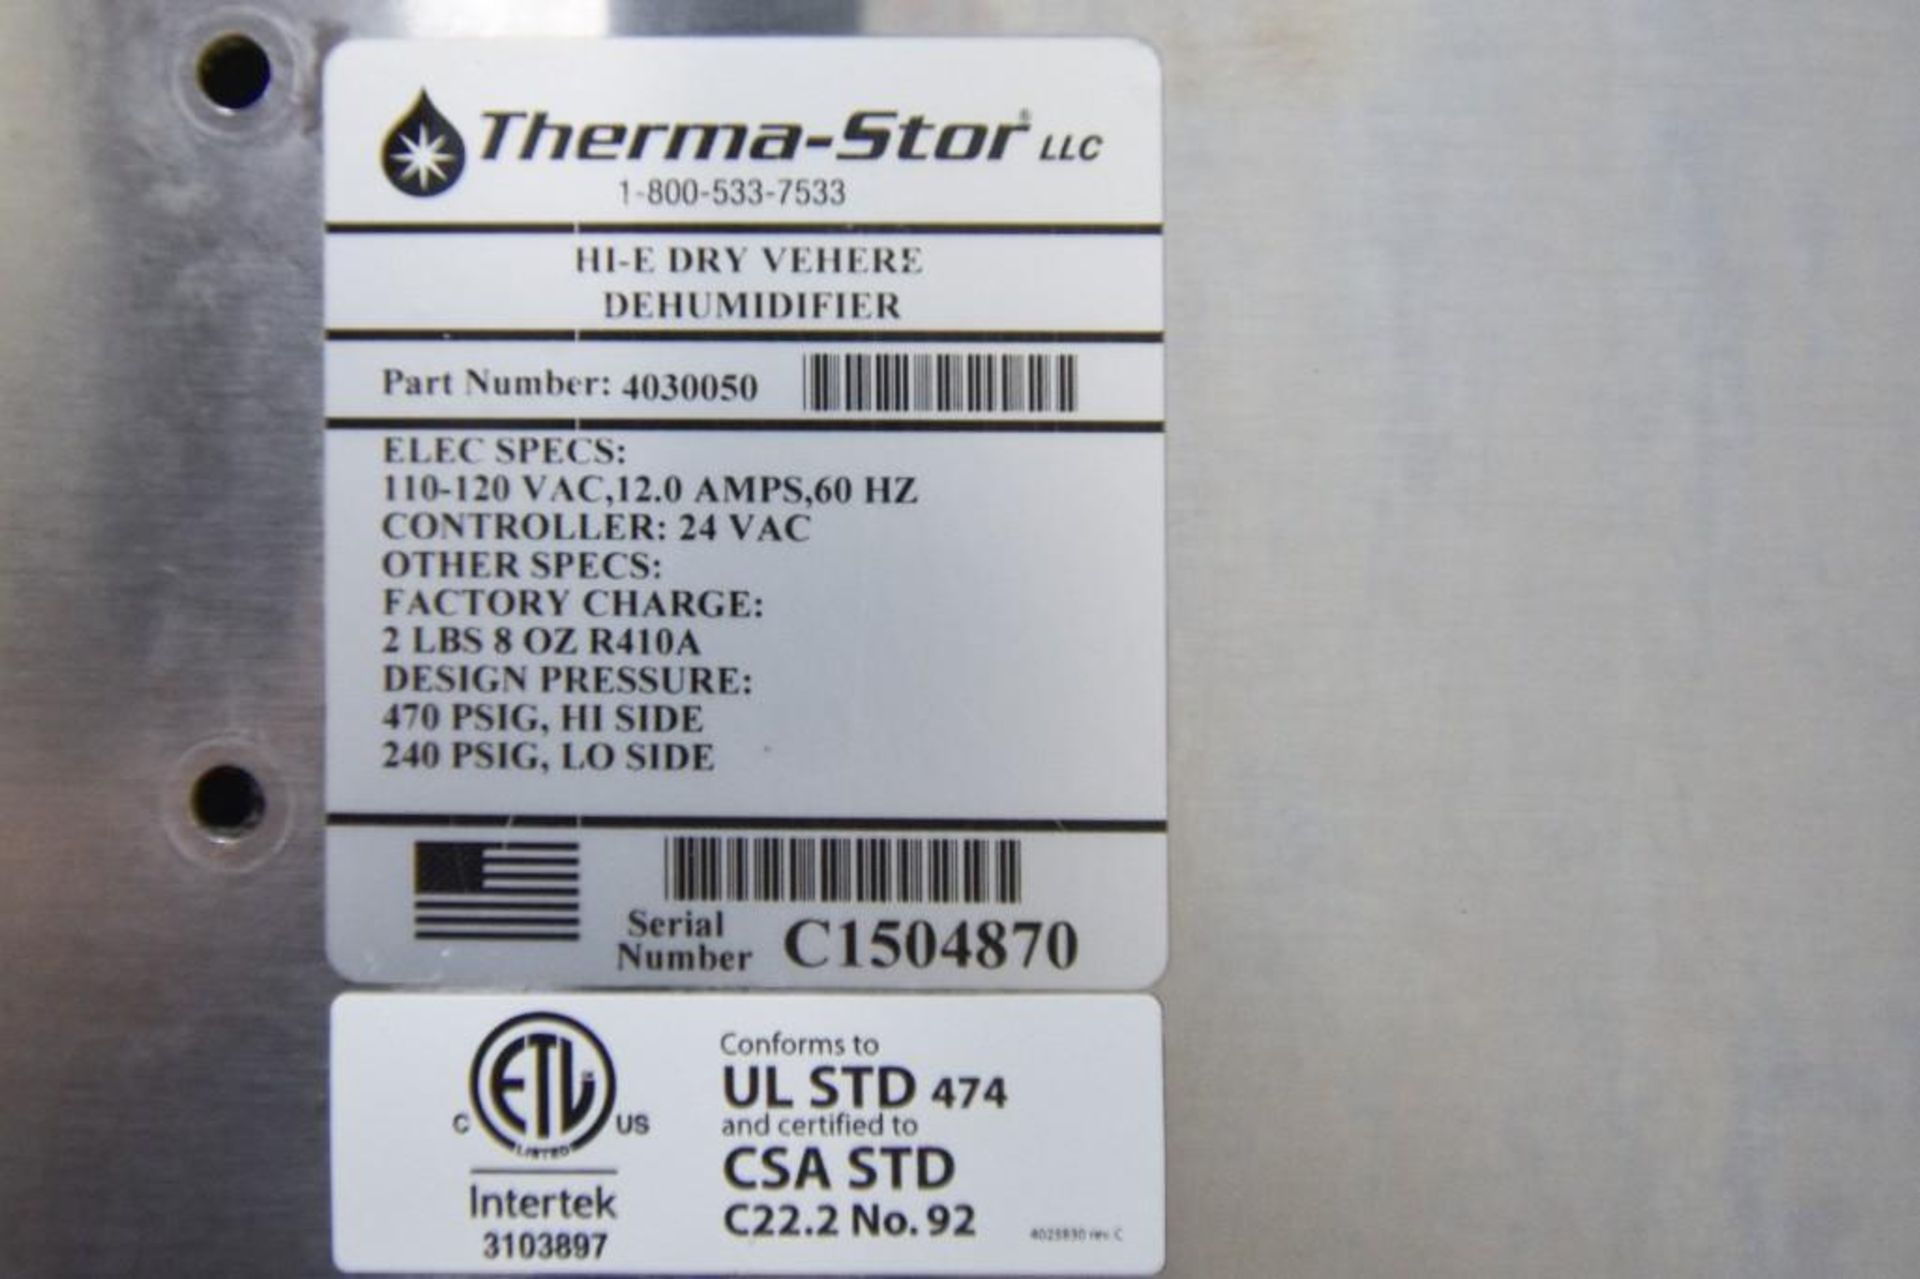 Hi-E Dry Vehere Thermastor - Image 2 of 2